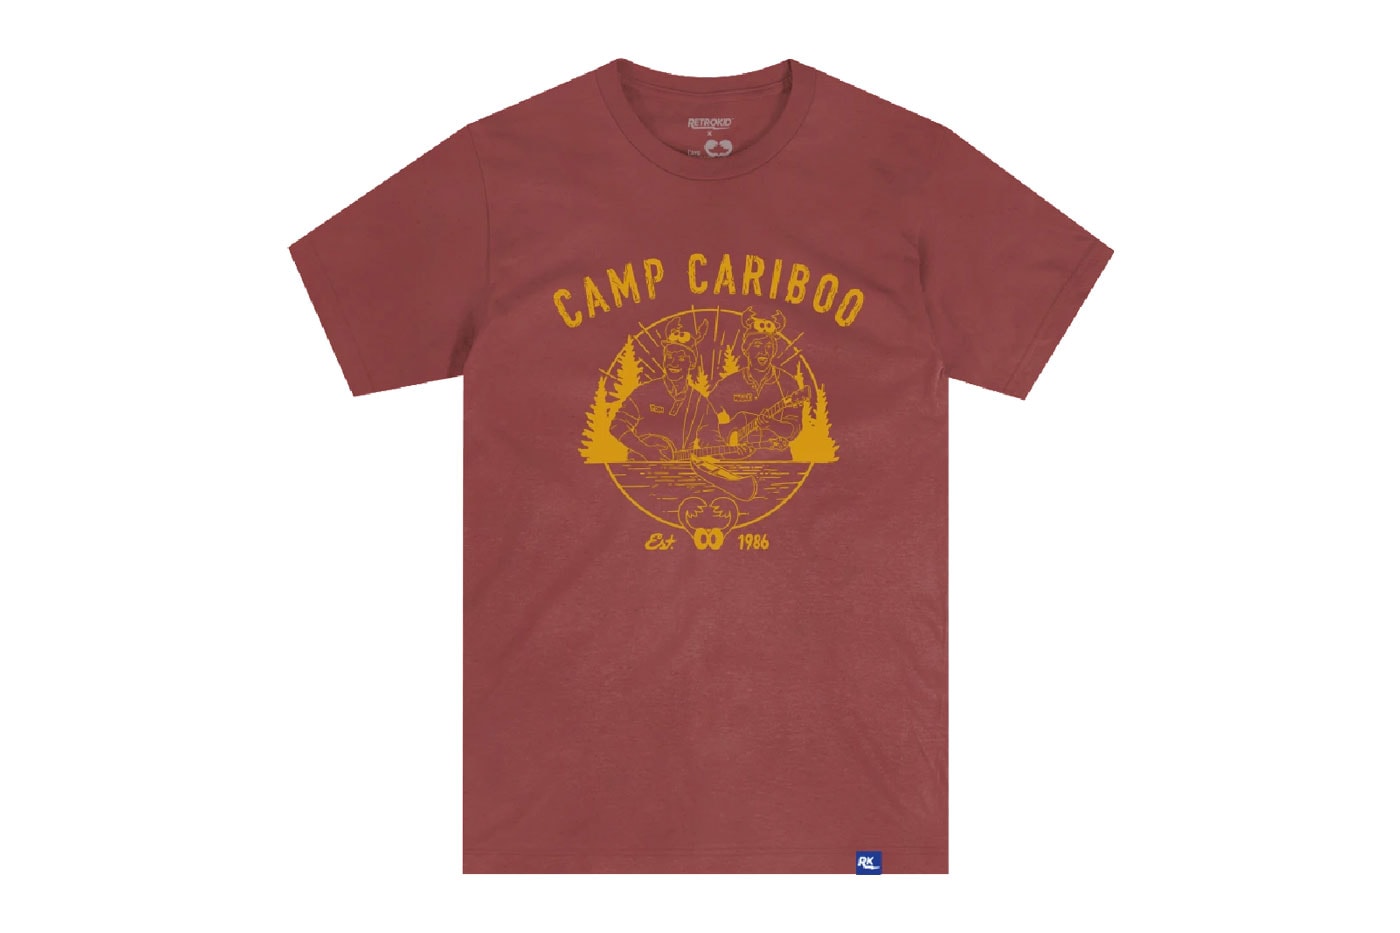 ytv retrokid PJ Phil Keep It Weird collection Camp Cariboo UH-OH Video & Arcade Top Nostalgia Kids TV show Toronto 